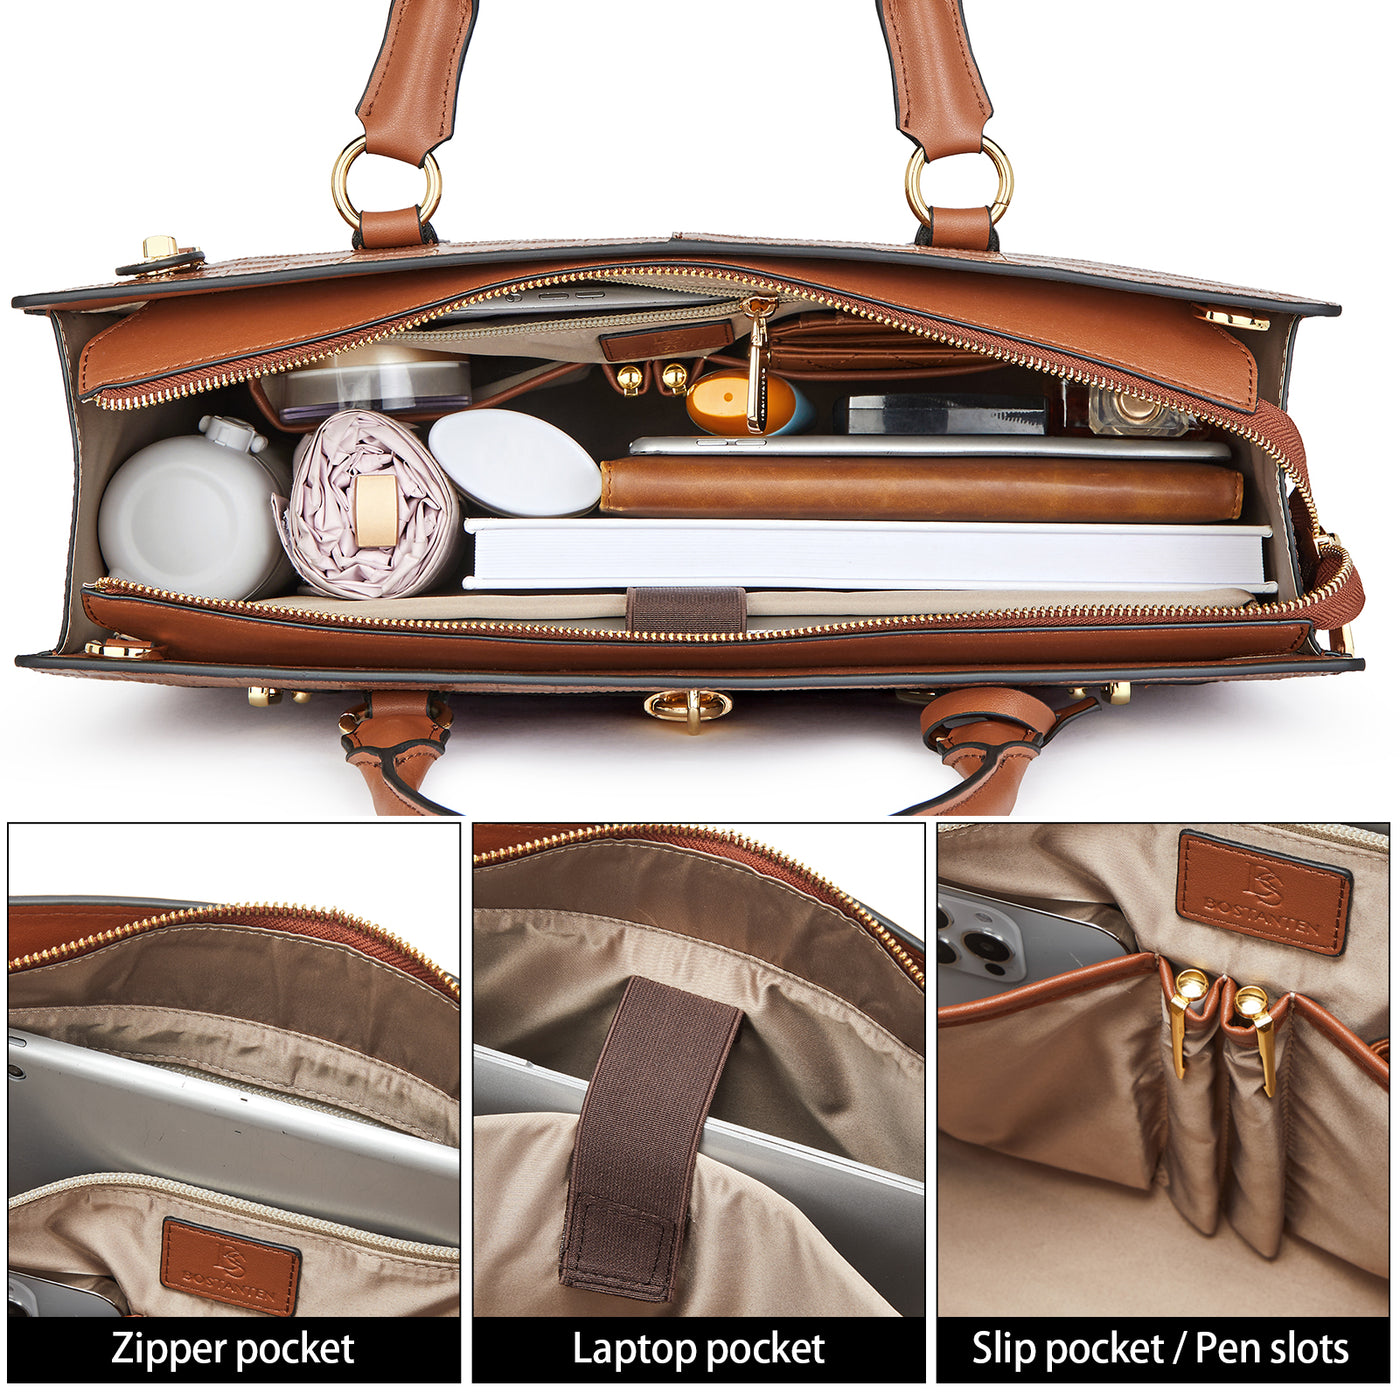 Designer Laptop Bags & Briefcases for Men